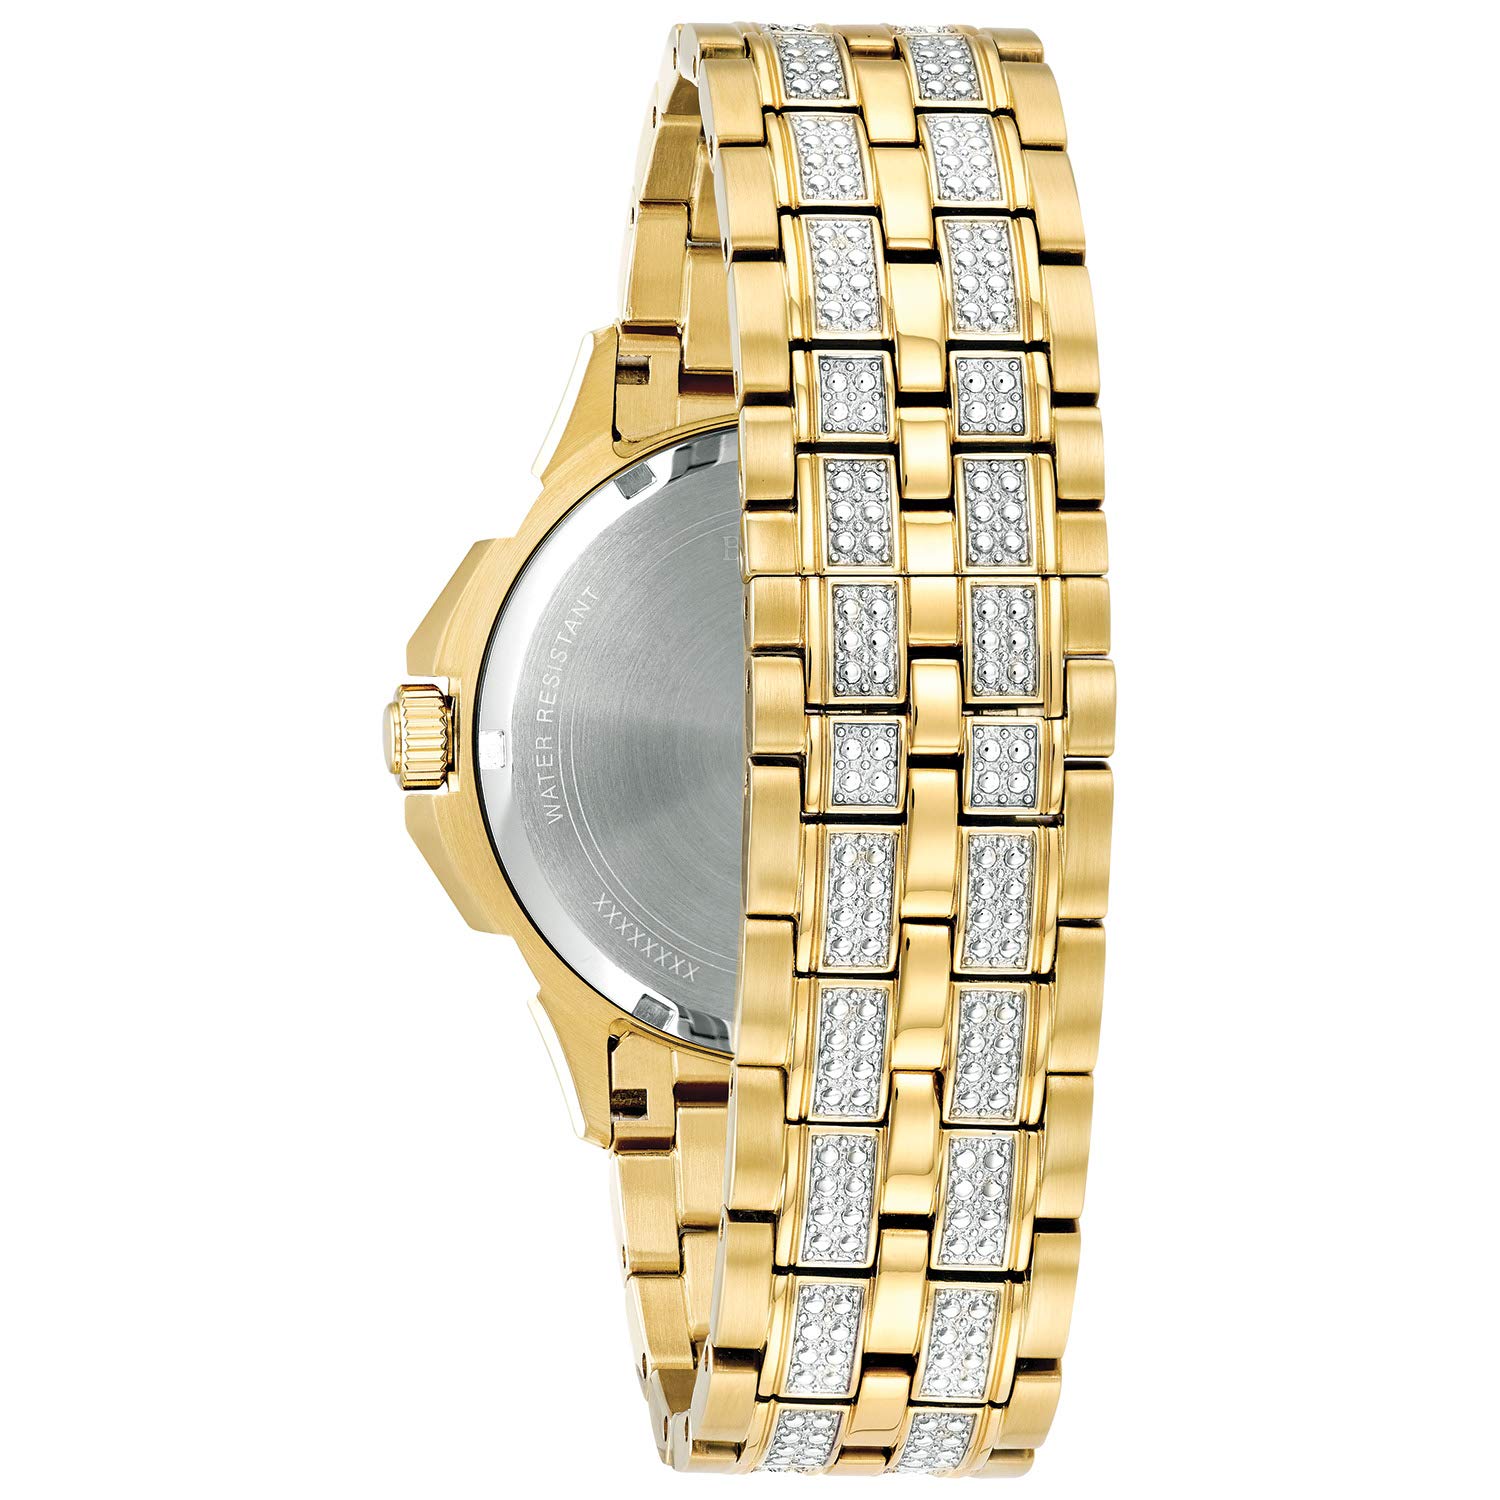 Bulova Men's Crystal Octava Chronograph Quartz Watch, Pave Crystal Dial